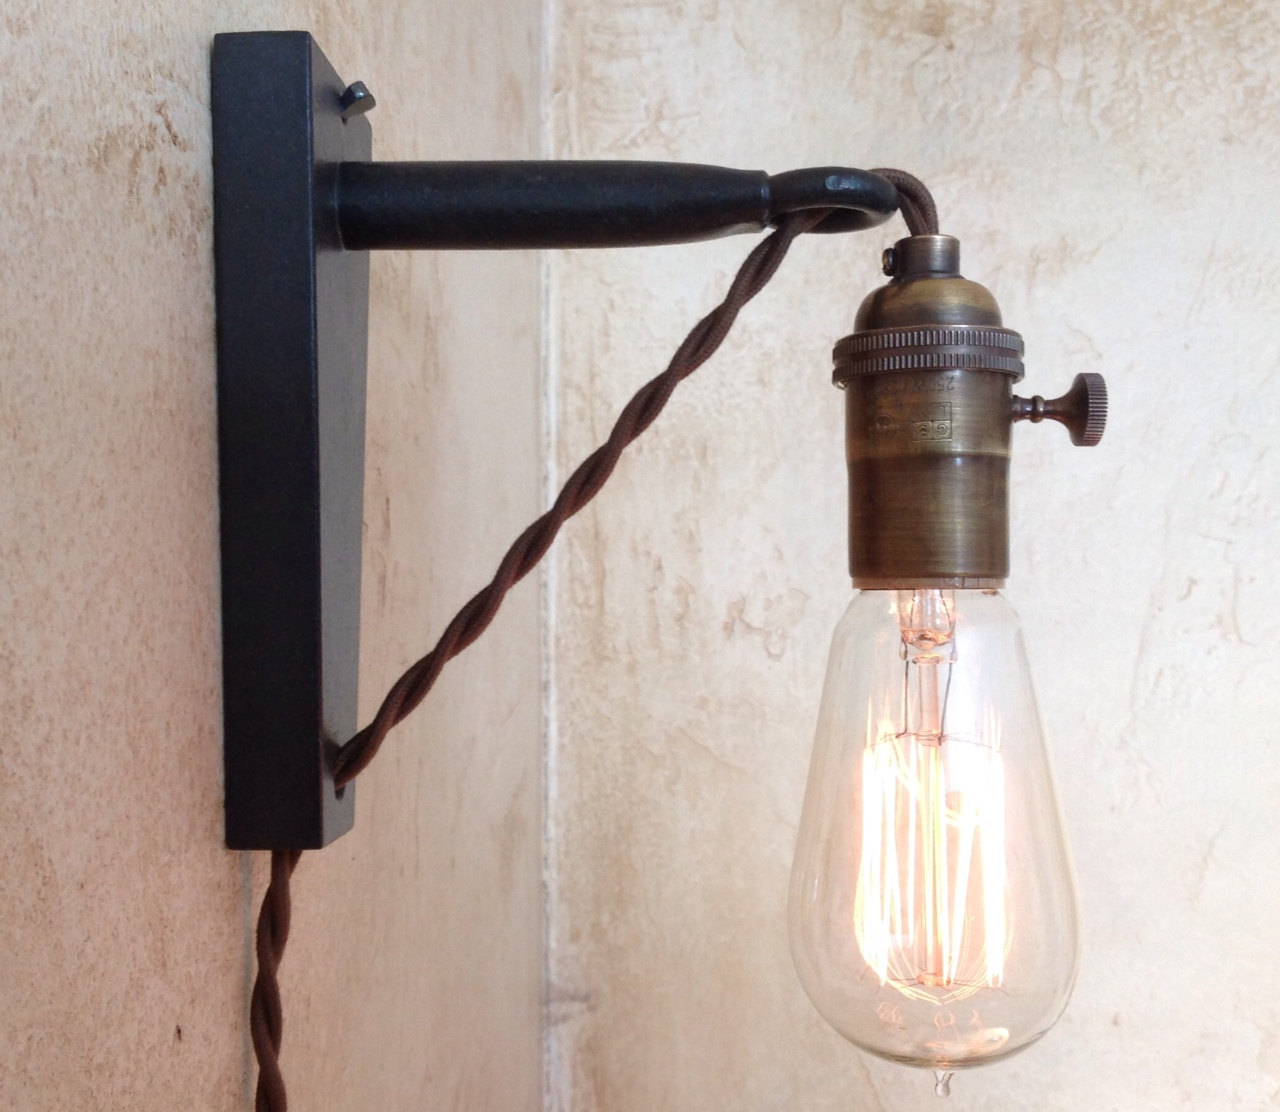 Light Up Your Home Using Plug In Lamp Warisan Lighting